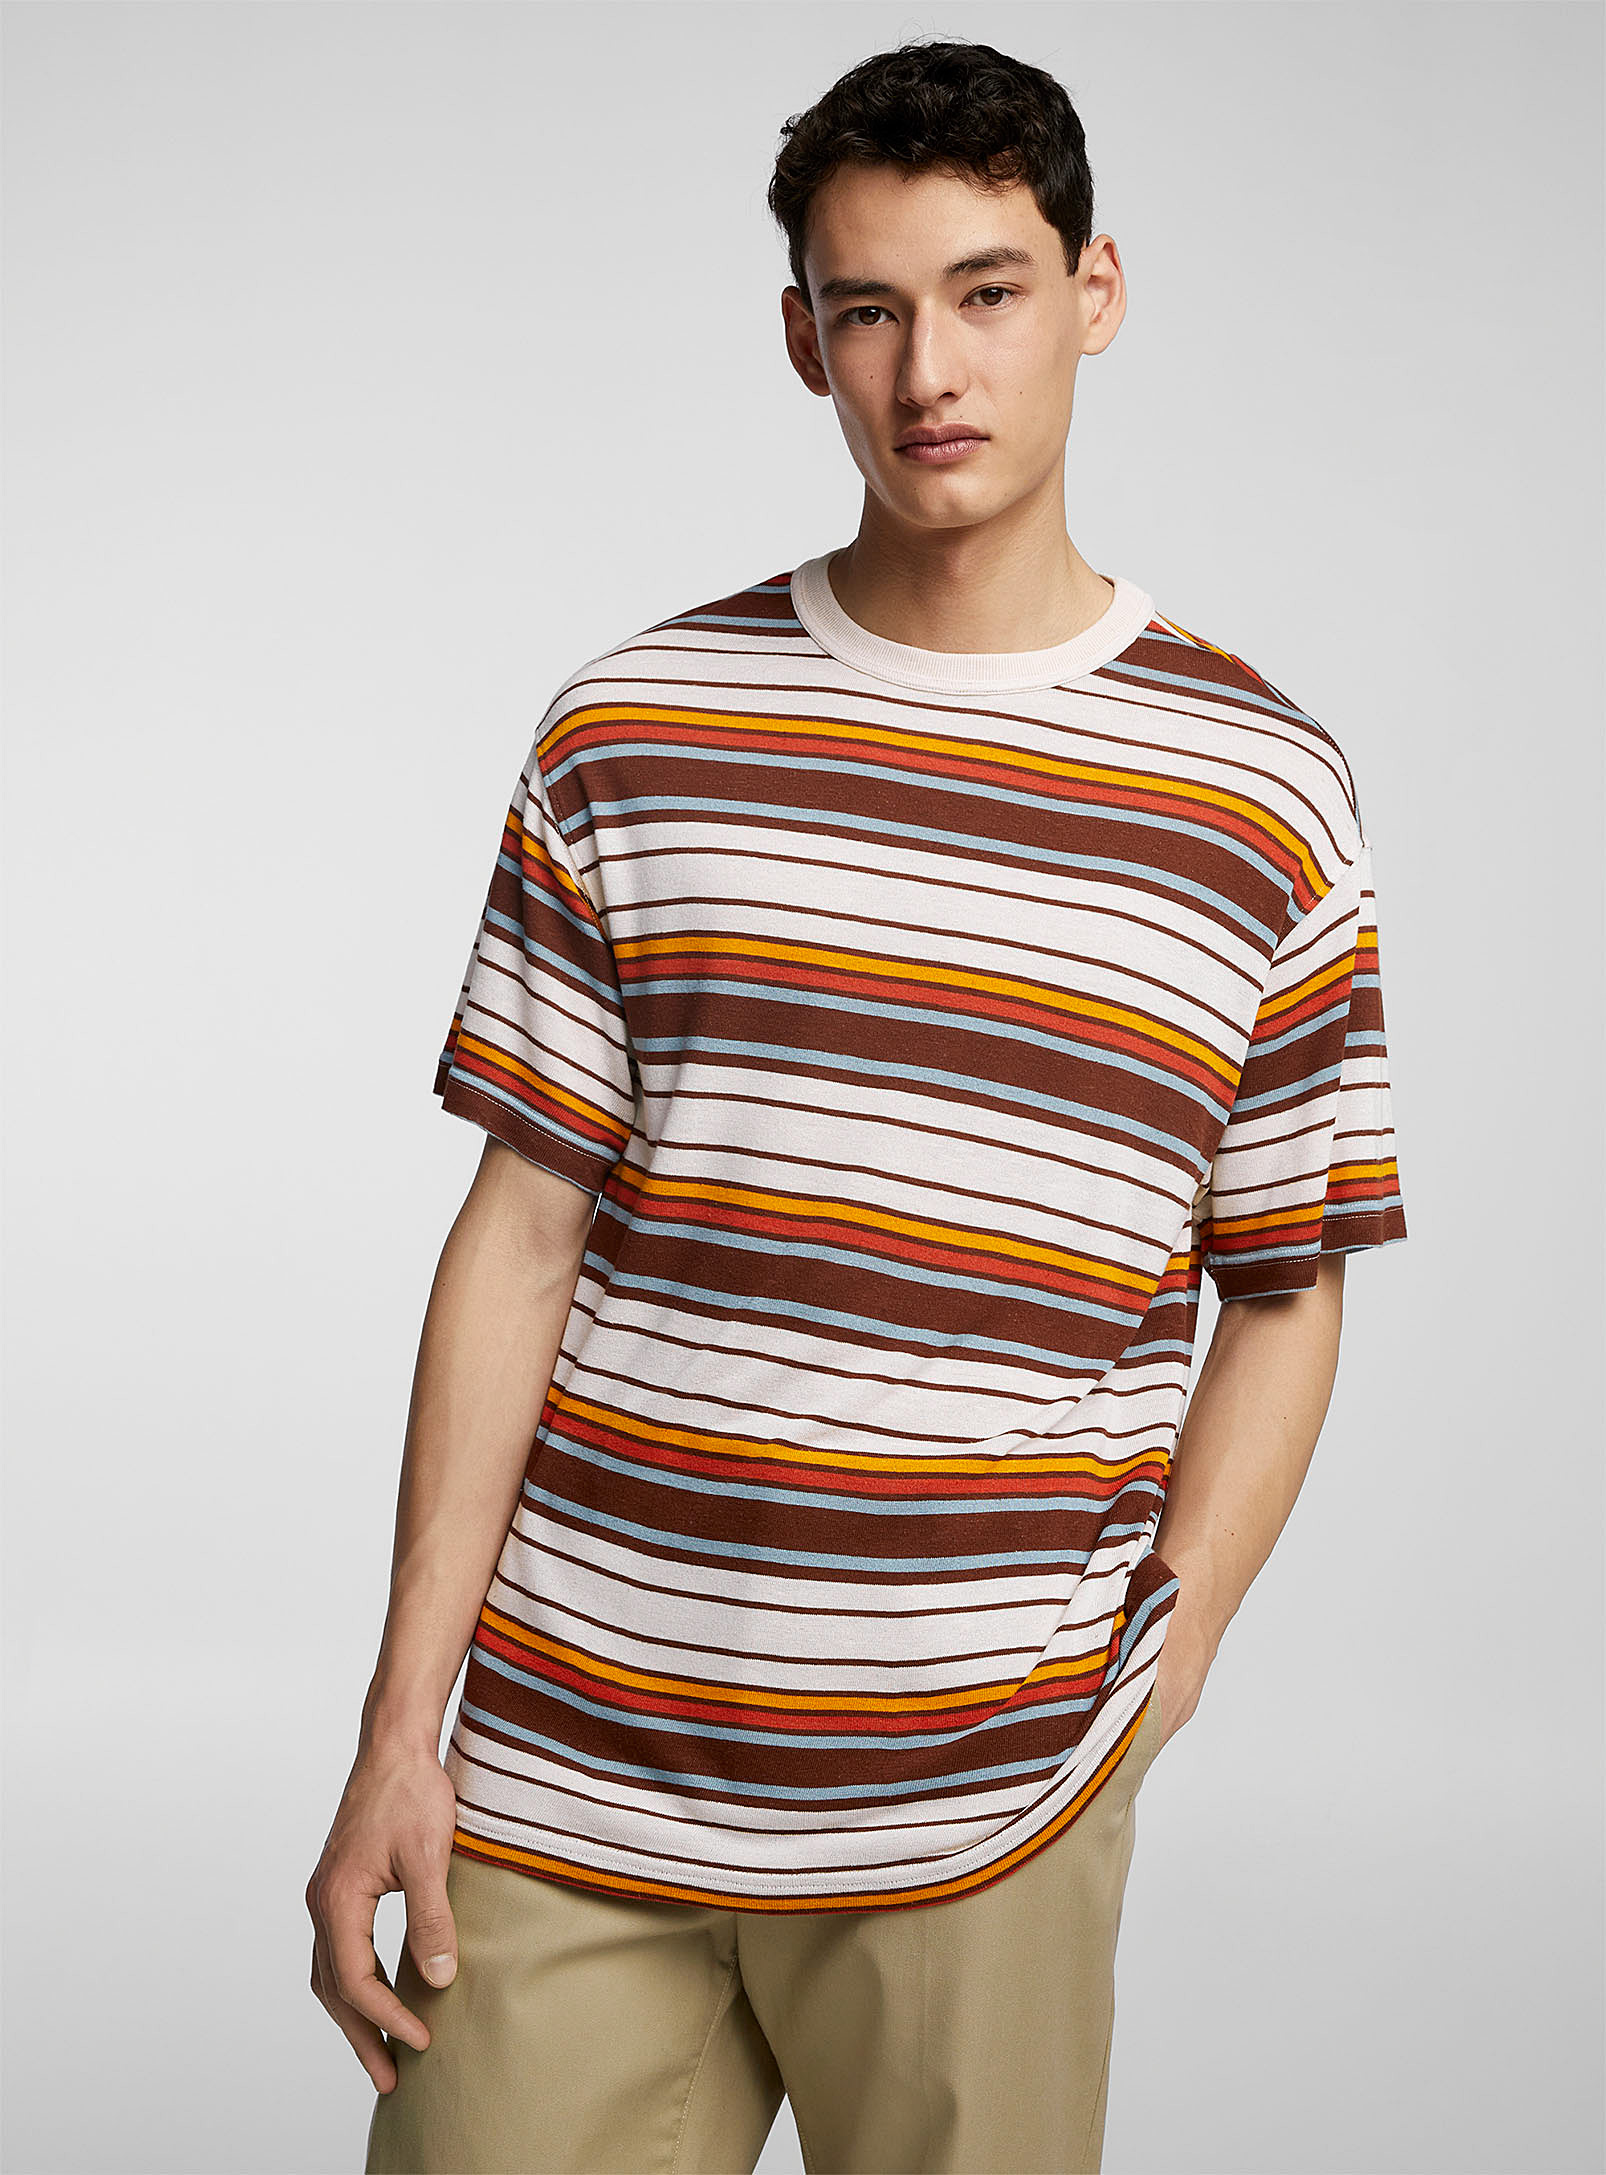 GANT - Men's Soft jersey striped T-shirt